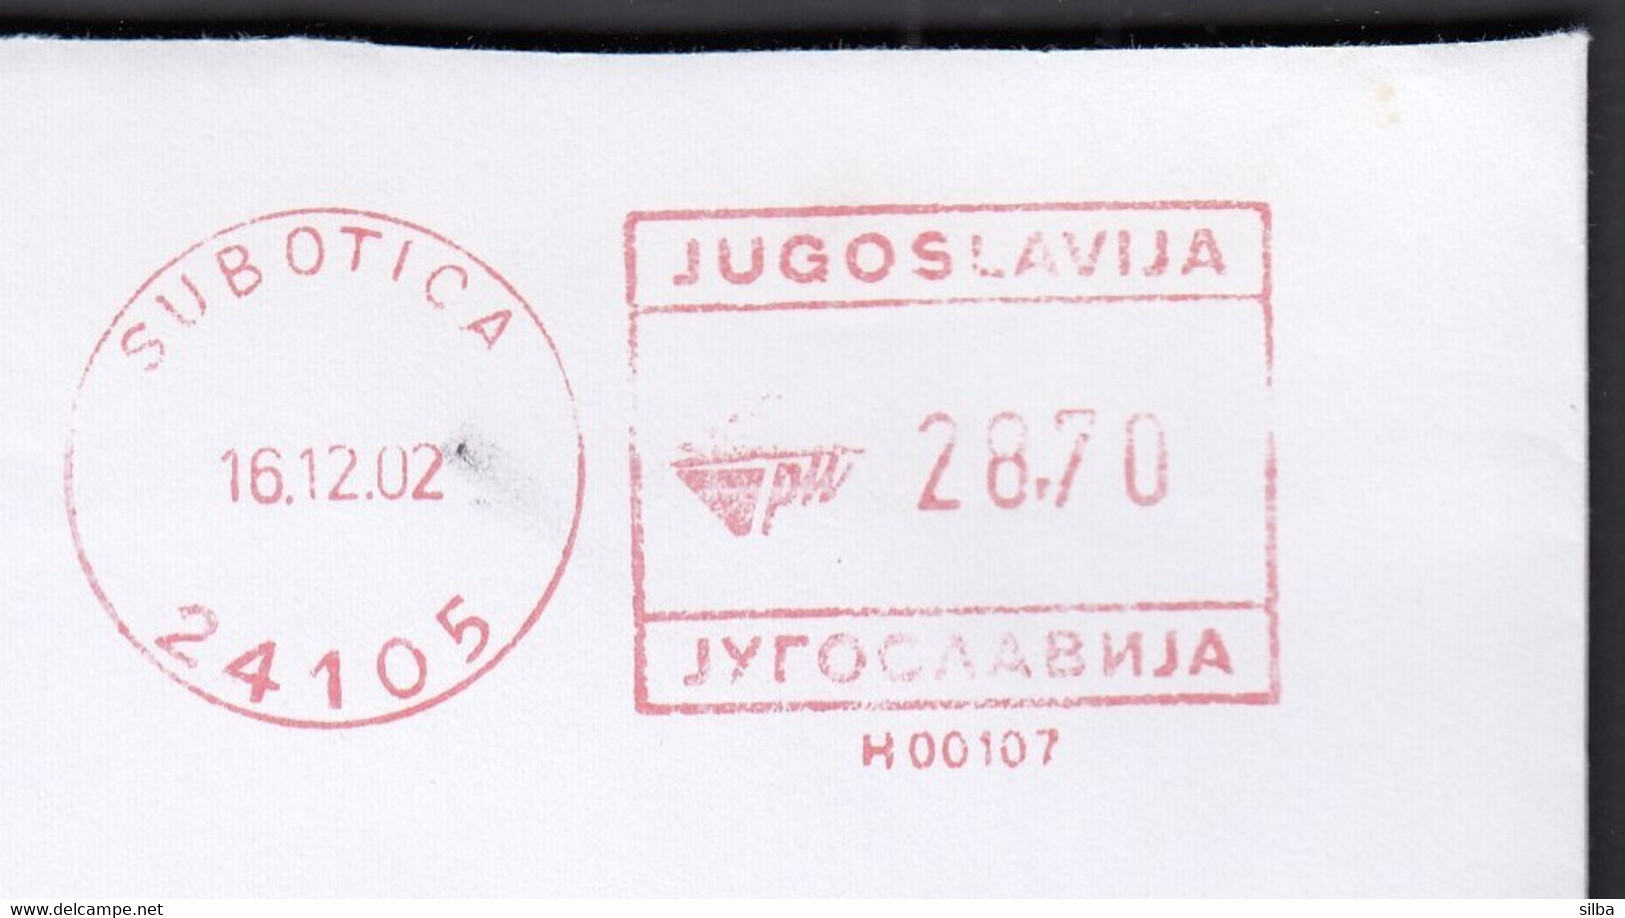 Yugoslavia Serbia Subotica 2002 / Machine Stamp ATM - Lettres & Documents